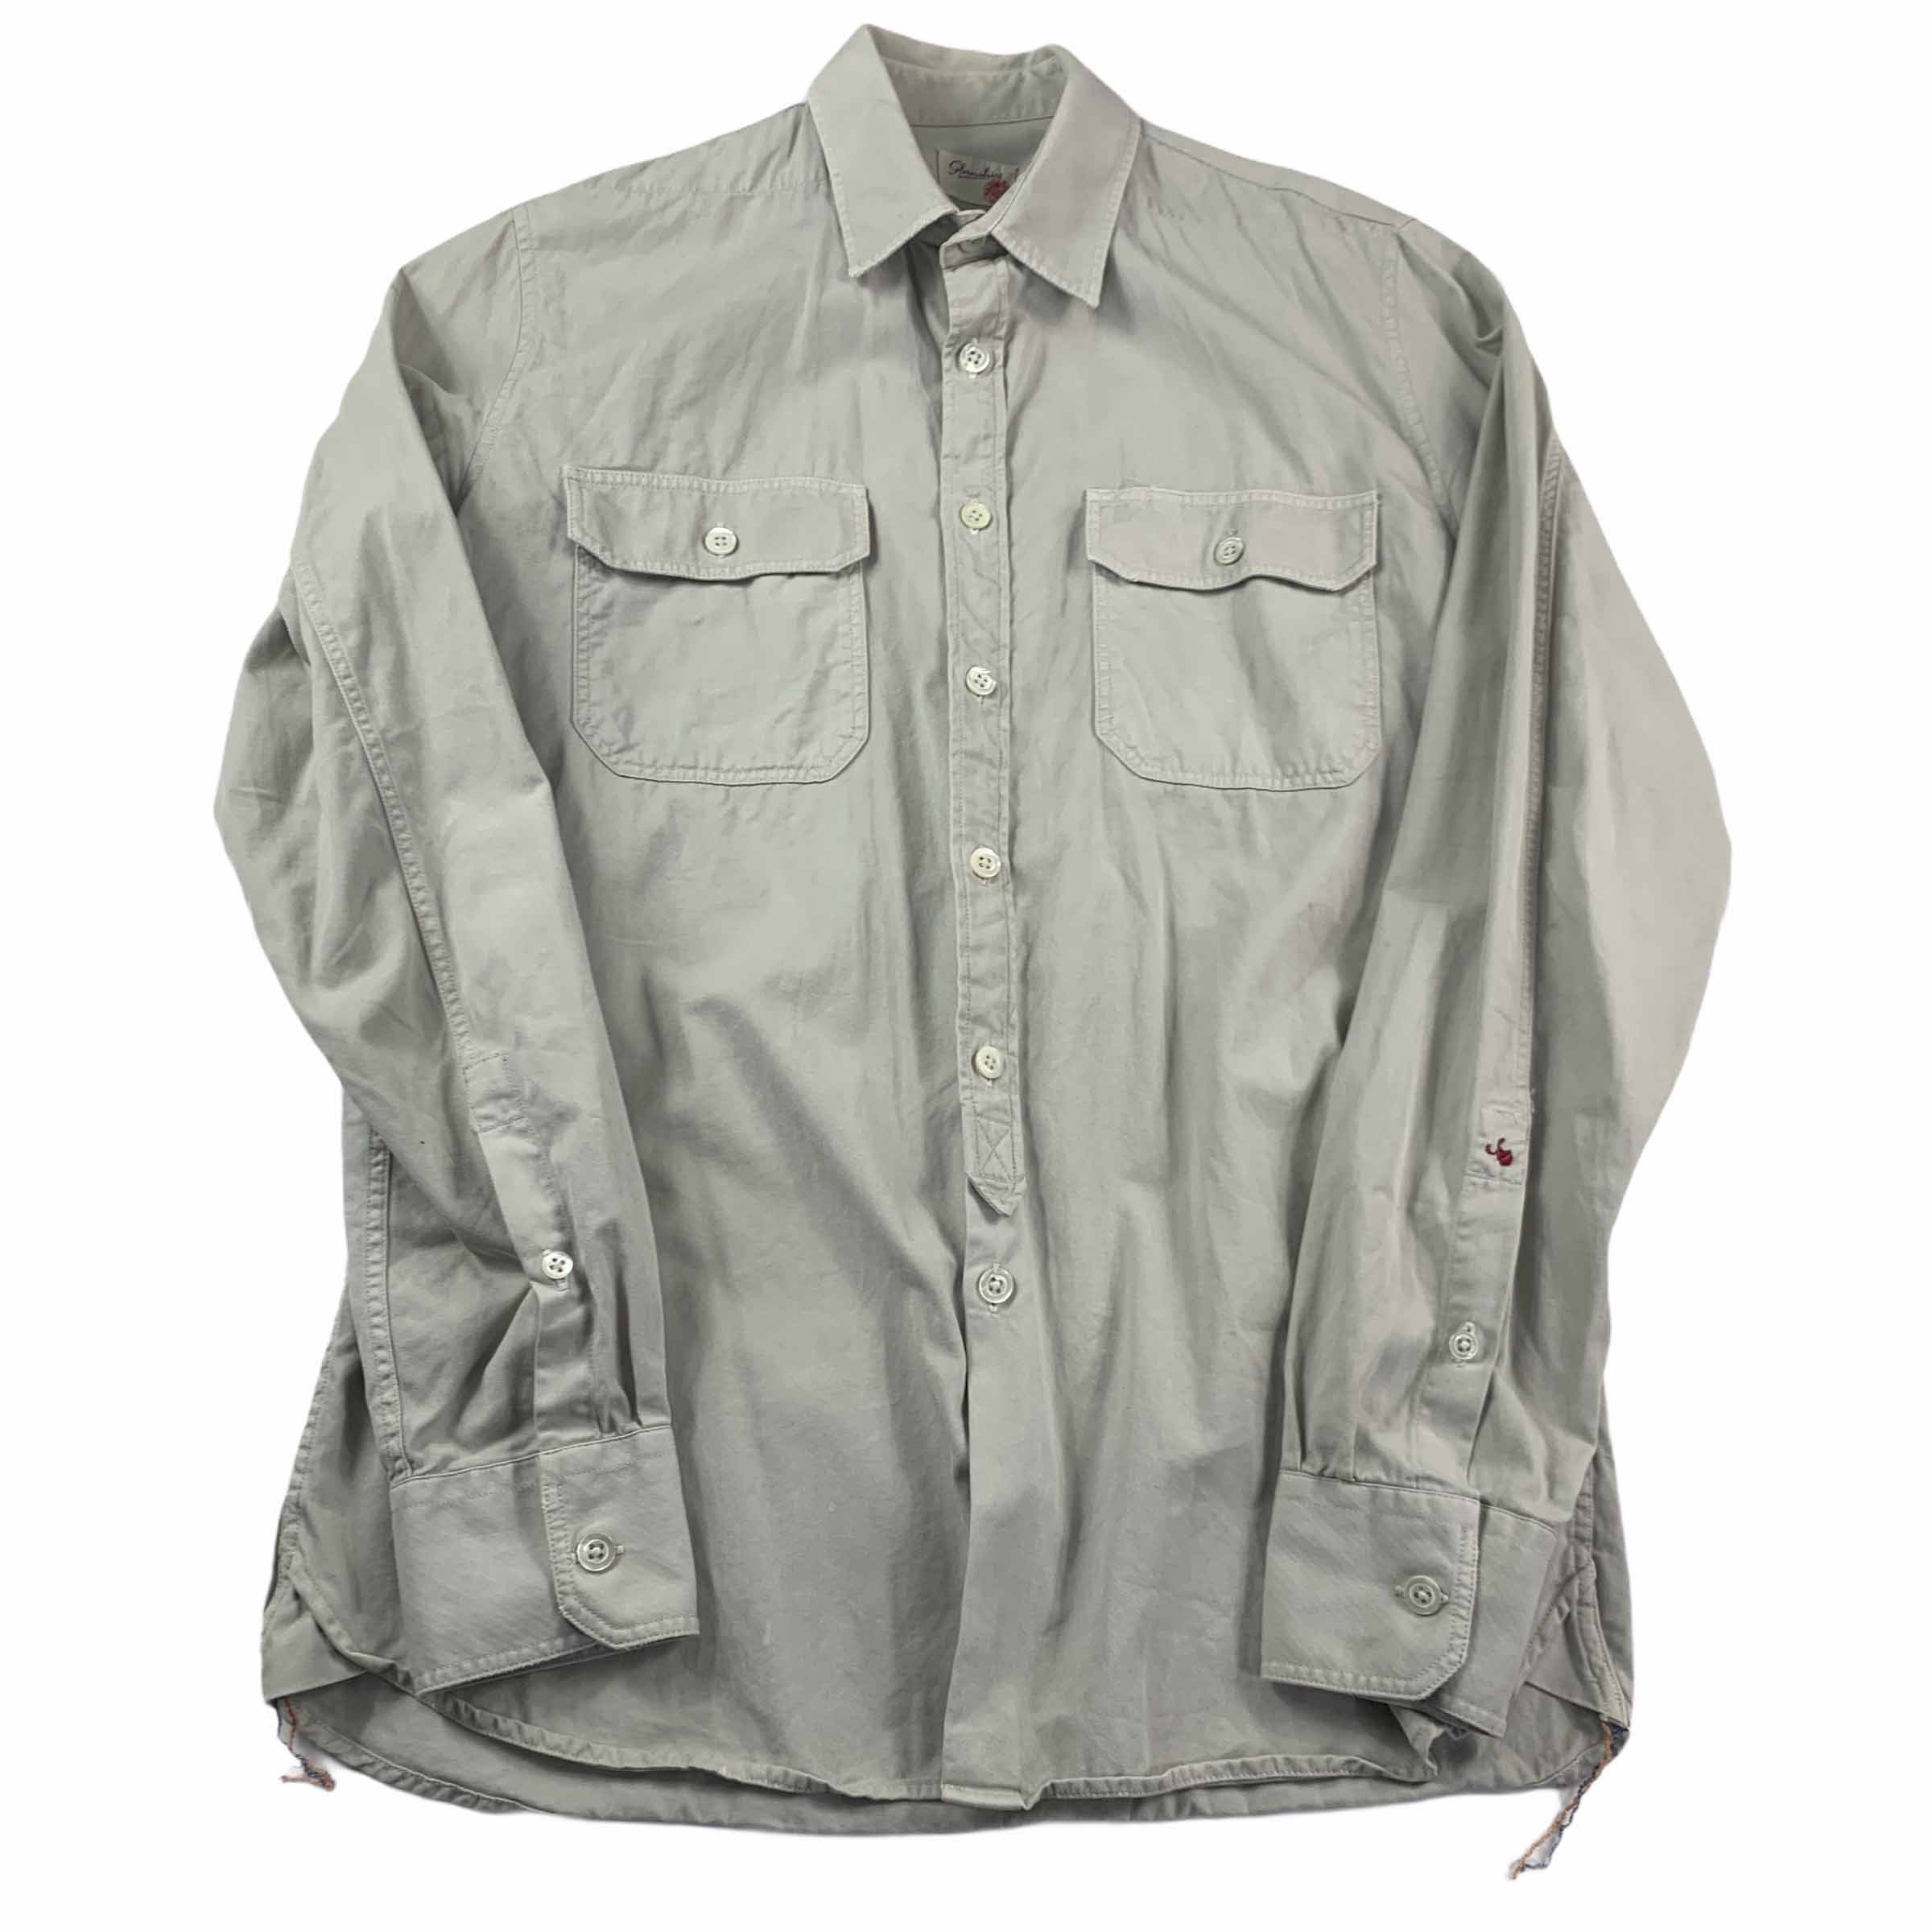 [Glan shirts] Two Pocket Shirt CG(Cool Gray) - Size 46